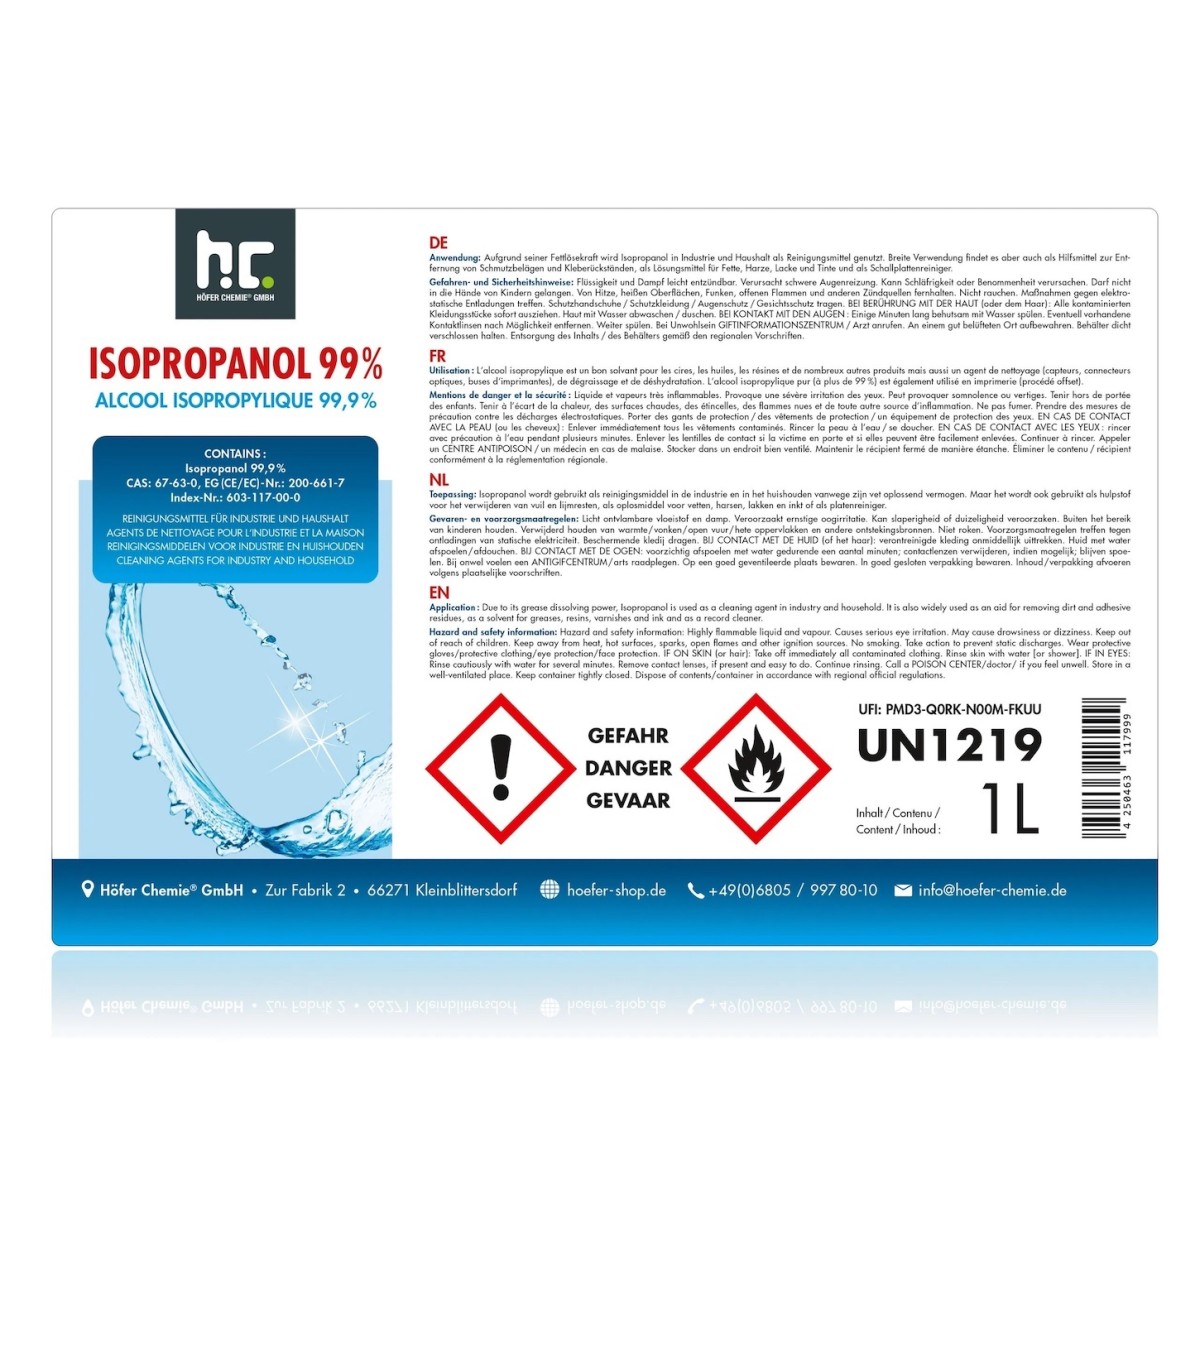 Alcohol isopropylique - Isopropanol - IPA - Isopropyle - 99,9